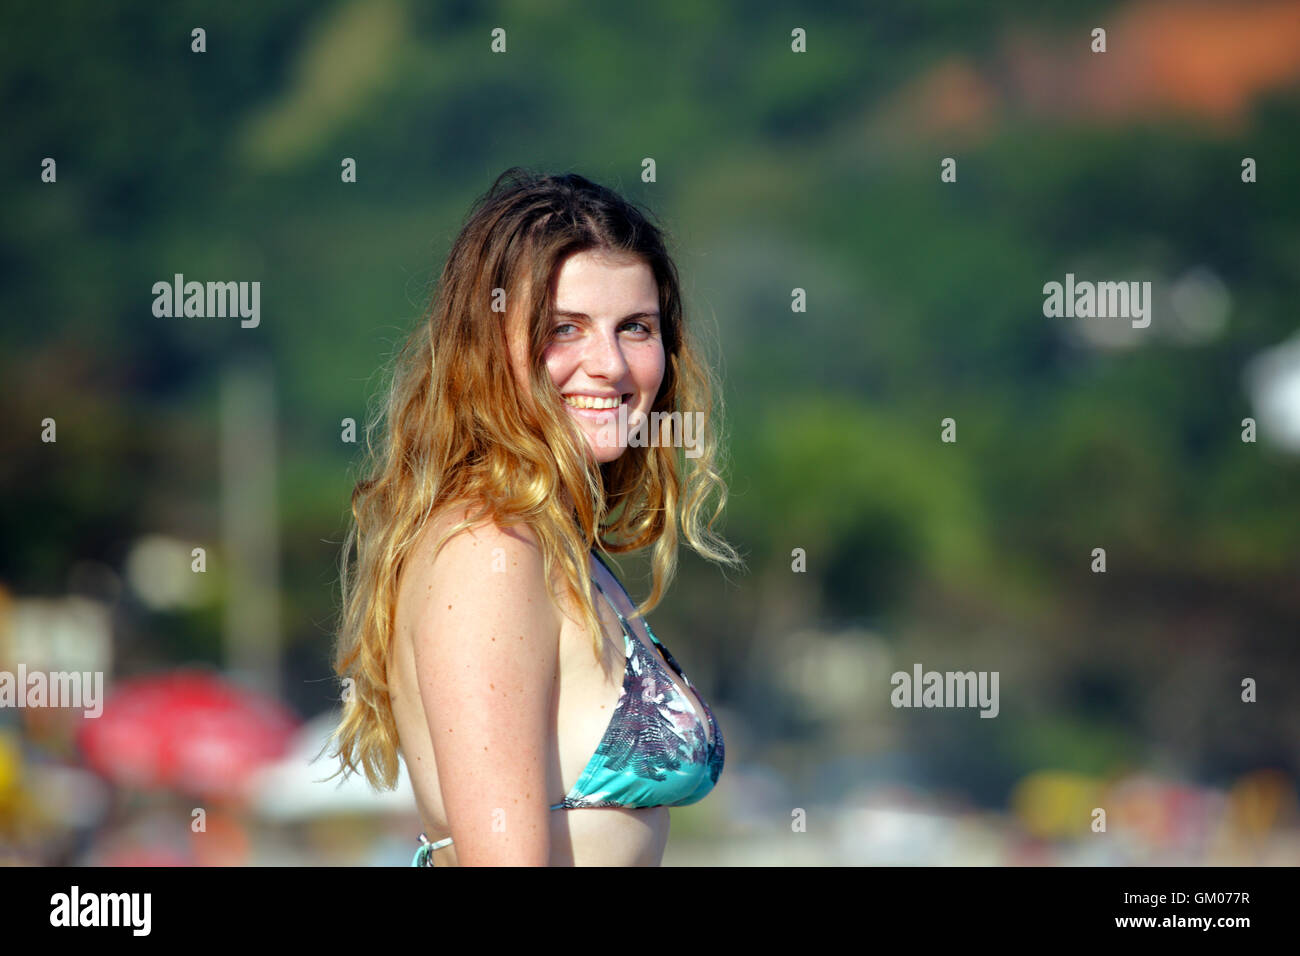 Twenty year old girl smiling and wearing a bikini at the beach Stock Photo